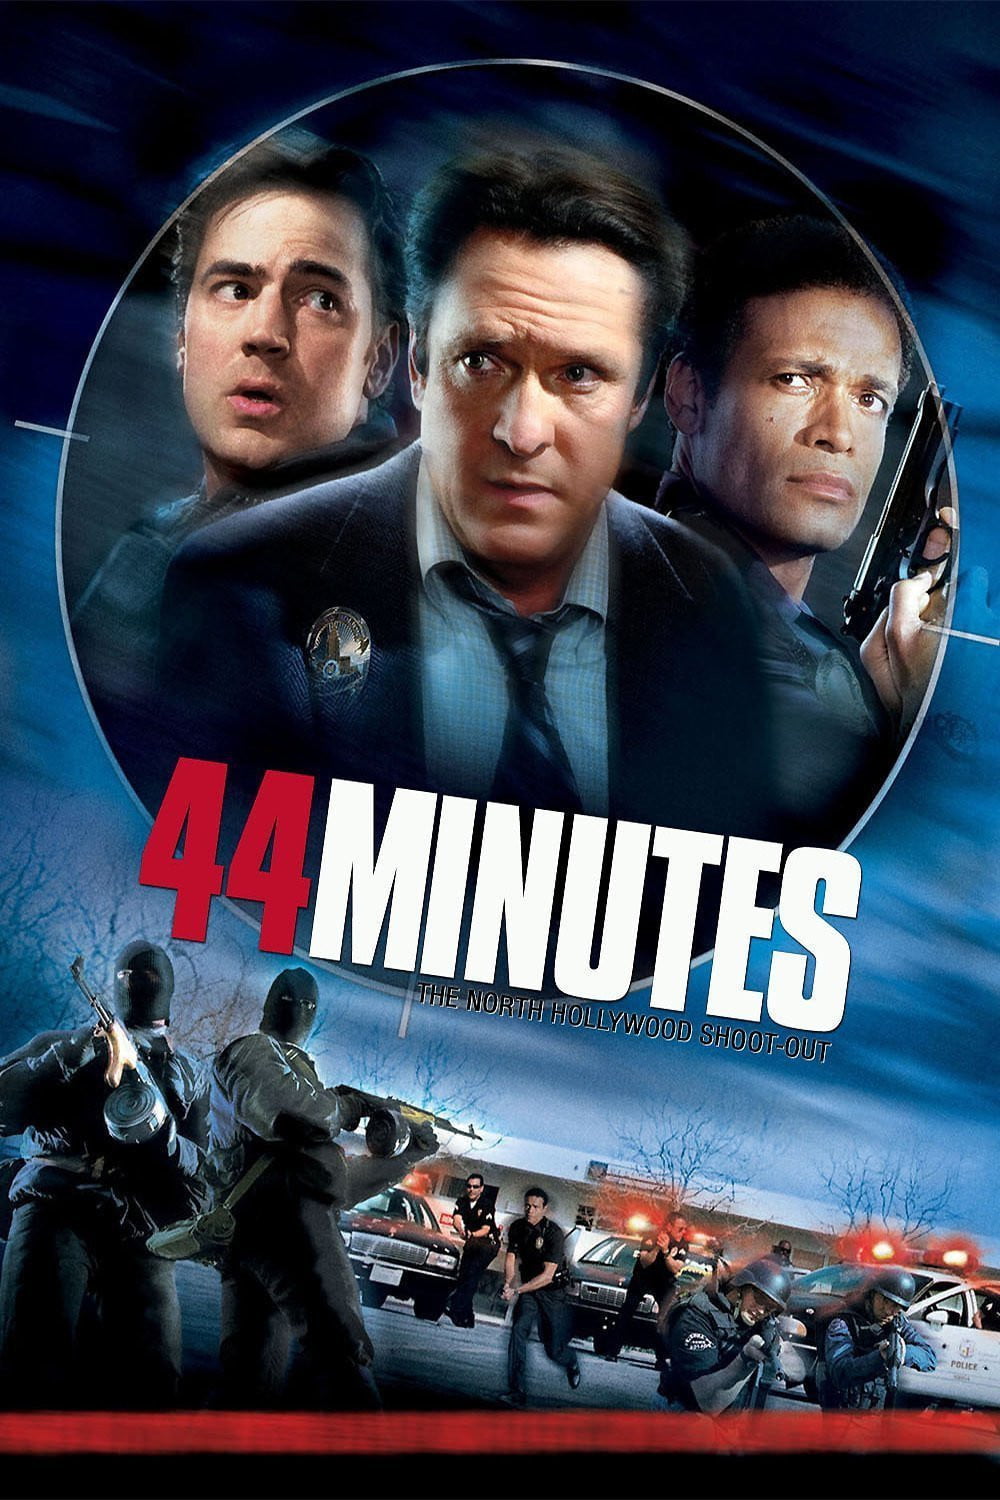 flashvideofilm - 44 minutes de terreur ( 2003 ) DVD - DVD